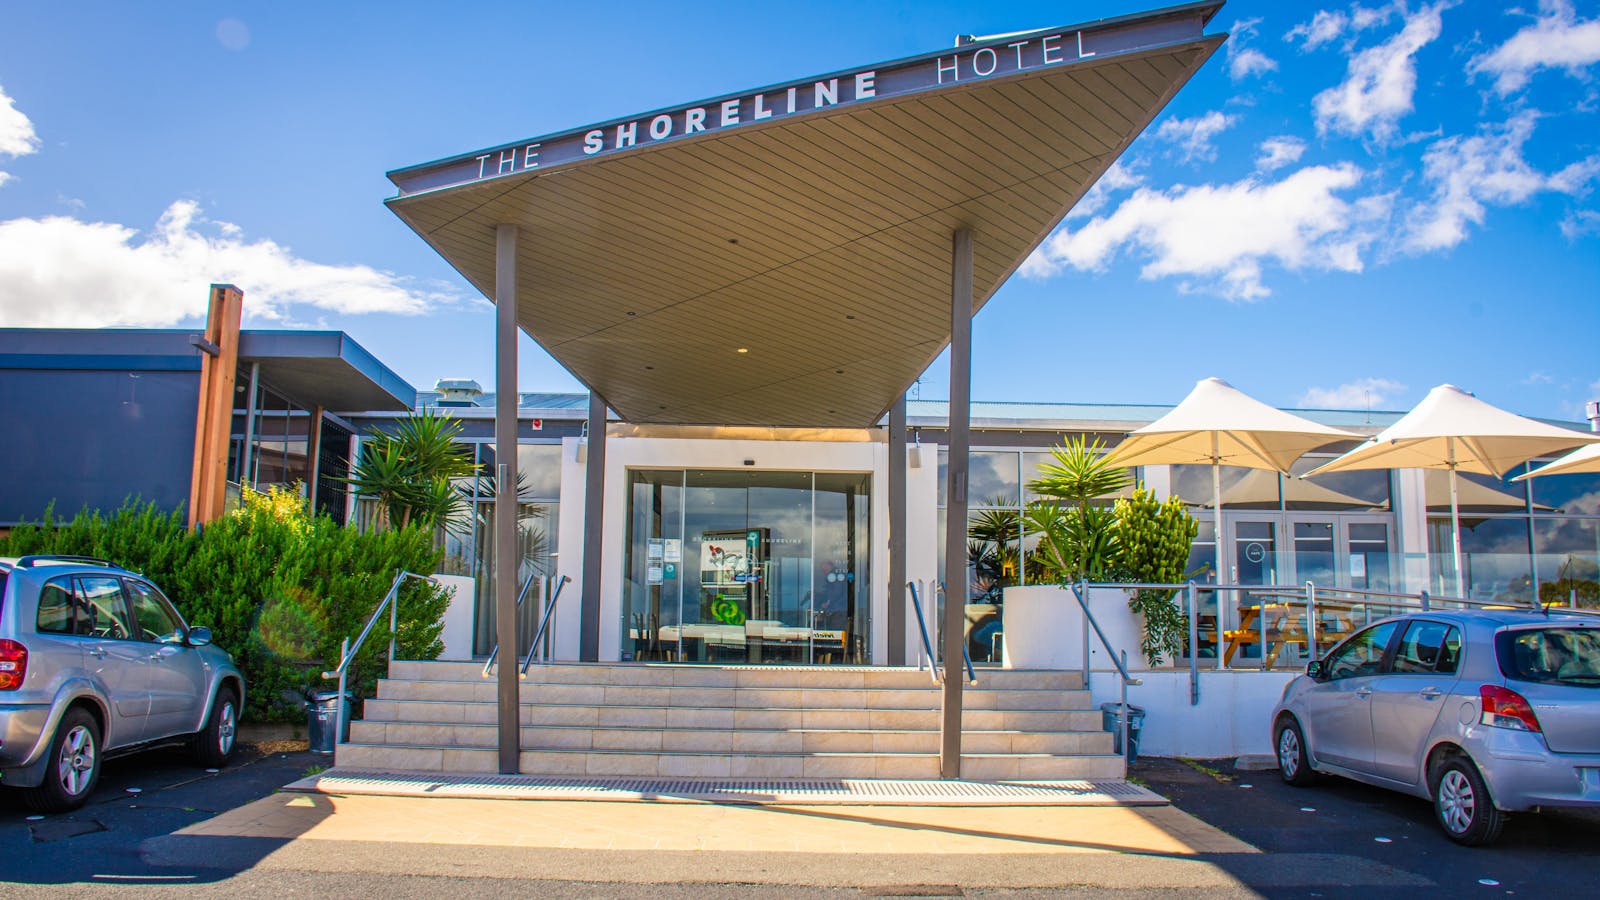 The Shoreline Hotel Entrance